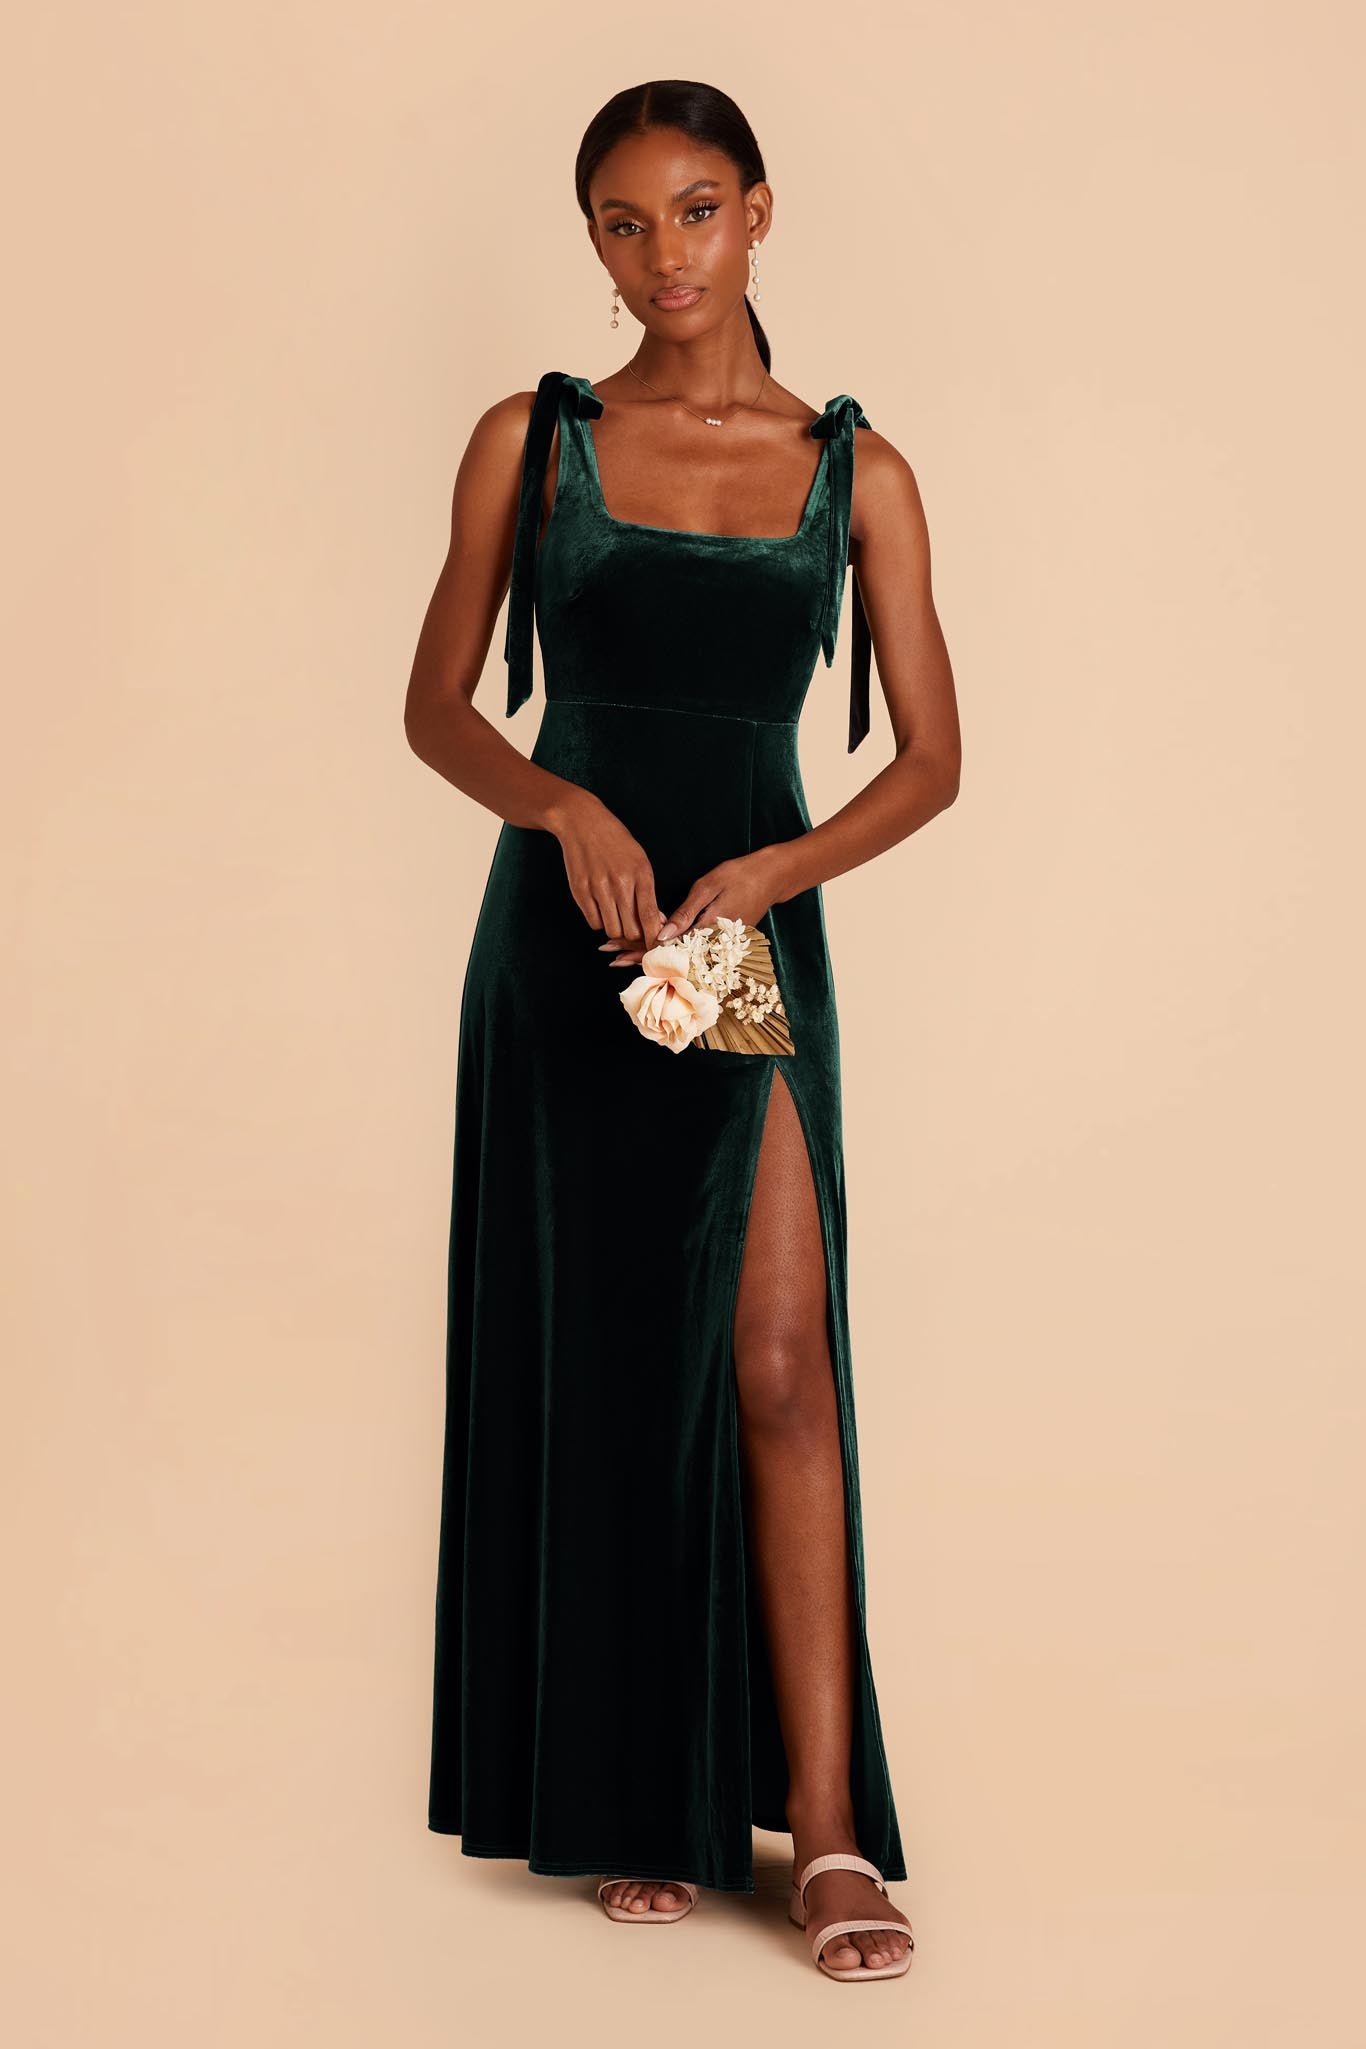 Emerald Alex Velvet Dress by Birdy Grey